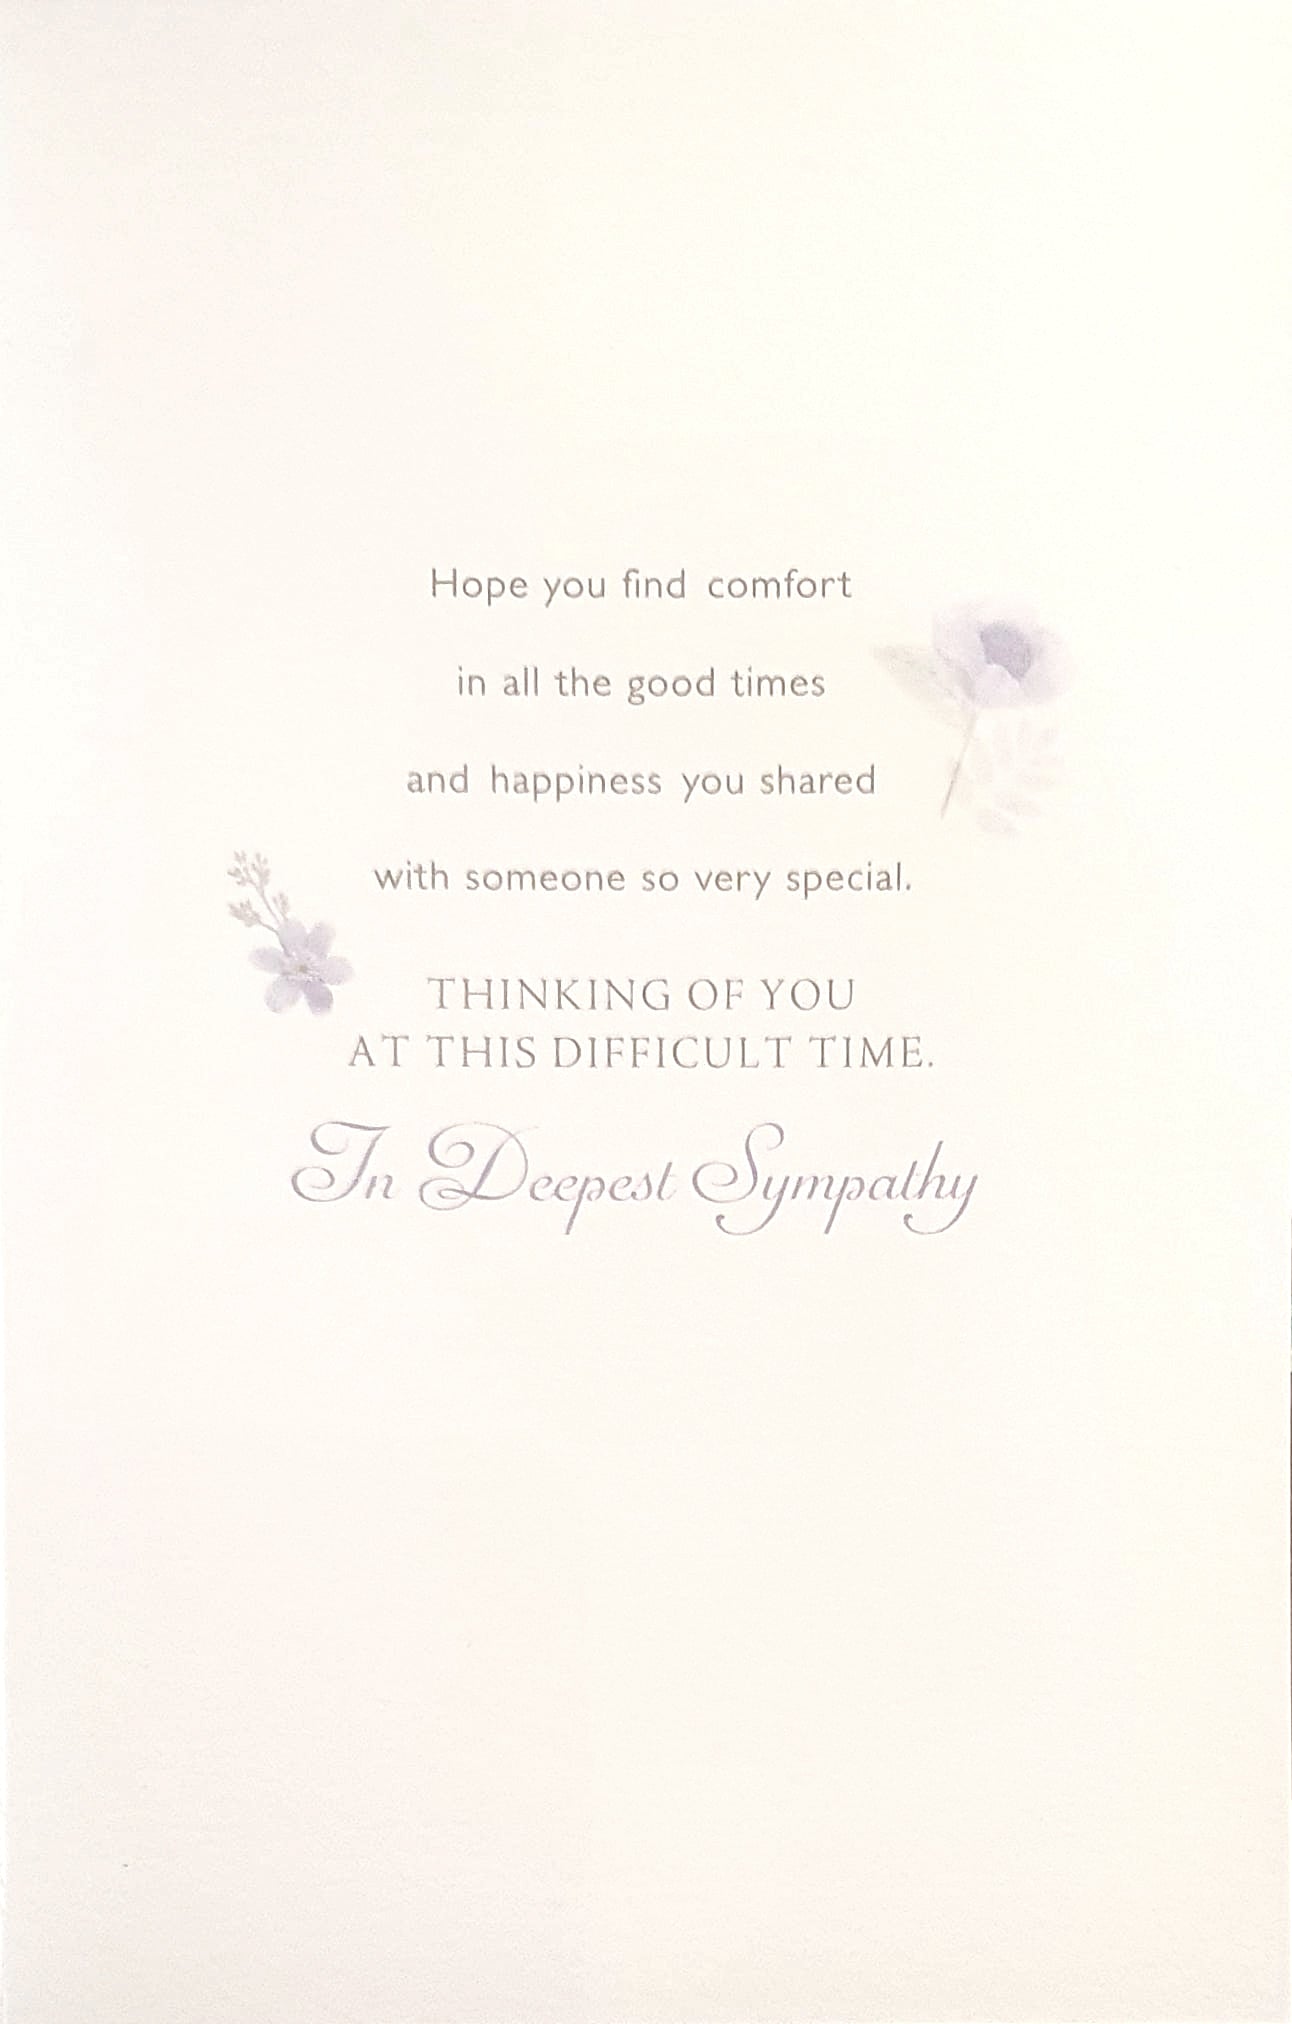 Mum Sympathy Card - A Floral Tribute